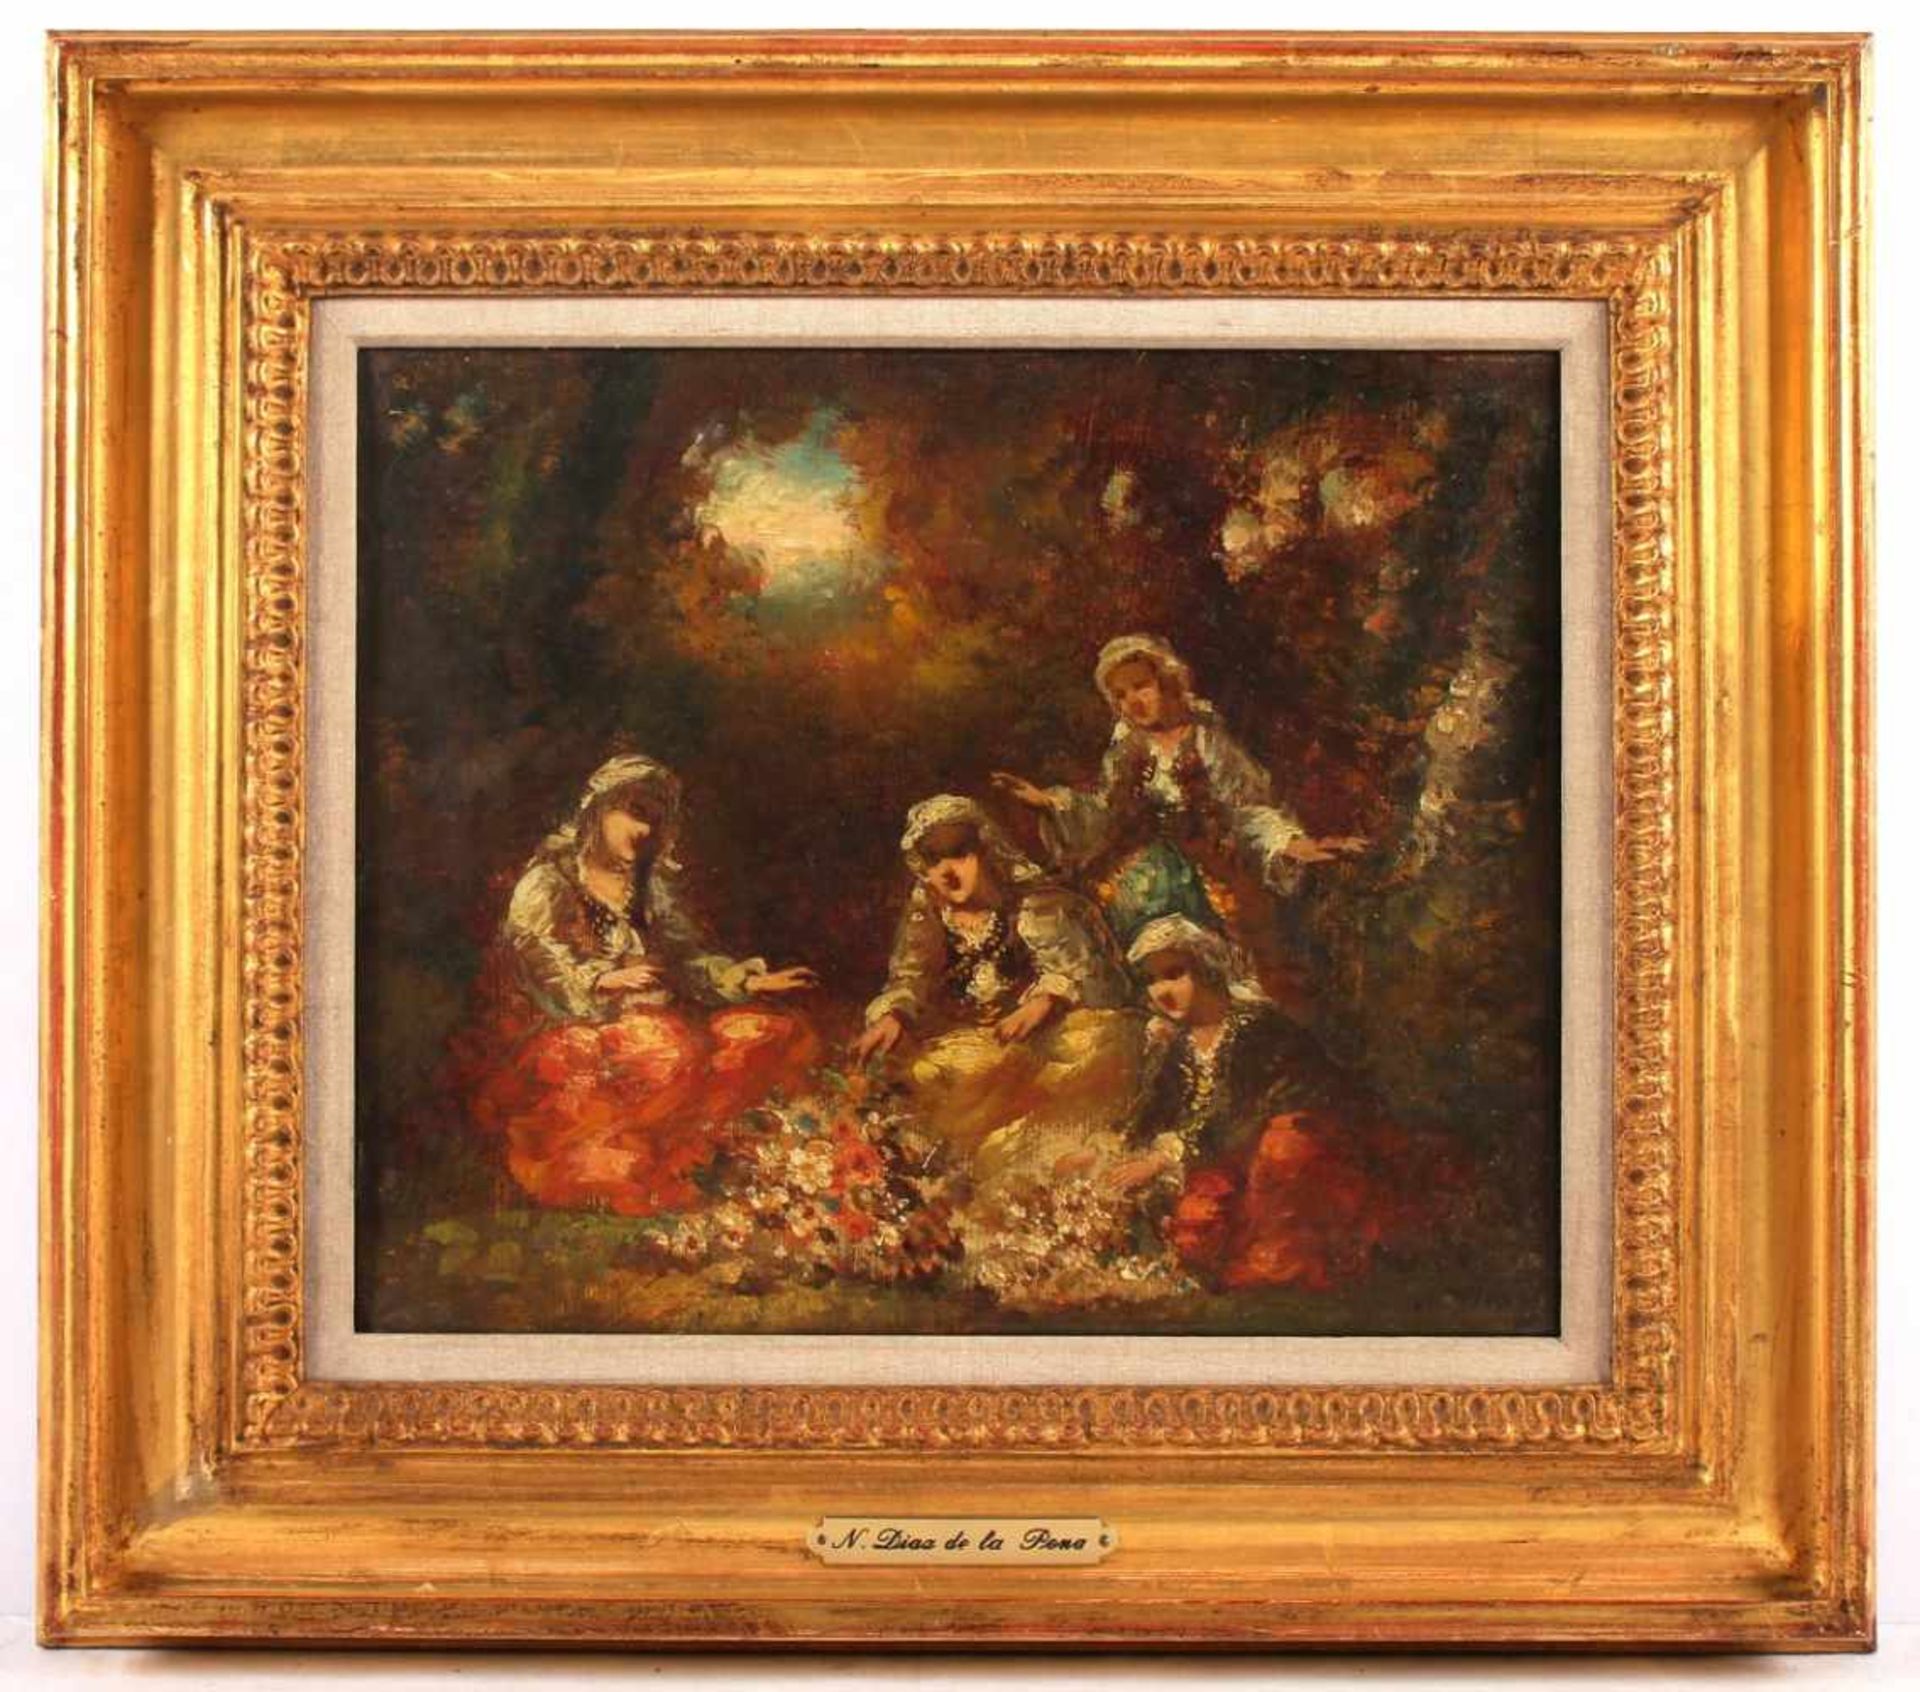 DIAZ DE LA PENA, Narcisse Virgile (1807-1876), zugeschrieben, "Vier Frauen im Park", Öl/Lwd., 22,5 x - Bild 2 aus 4